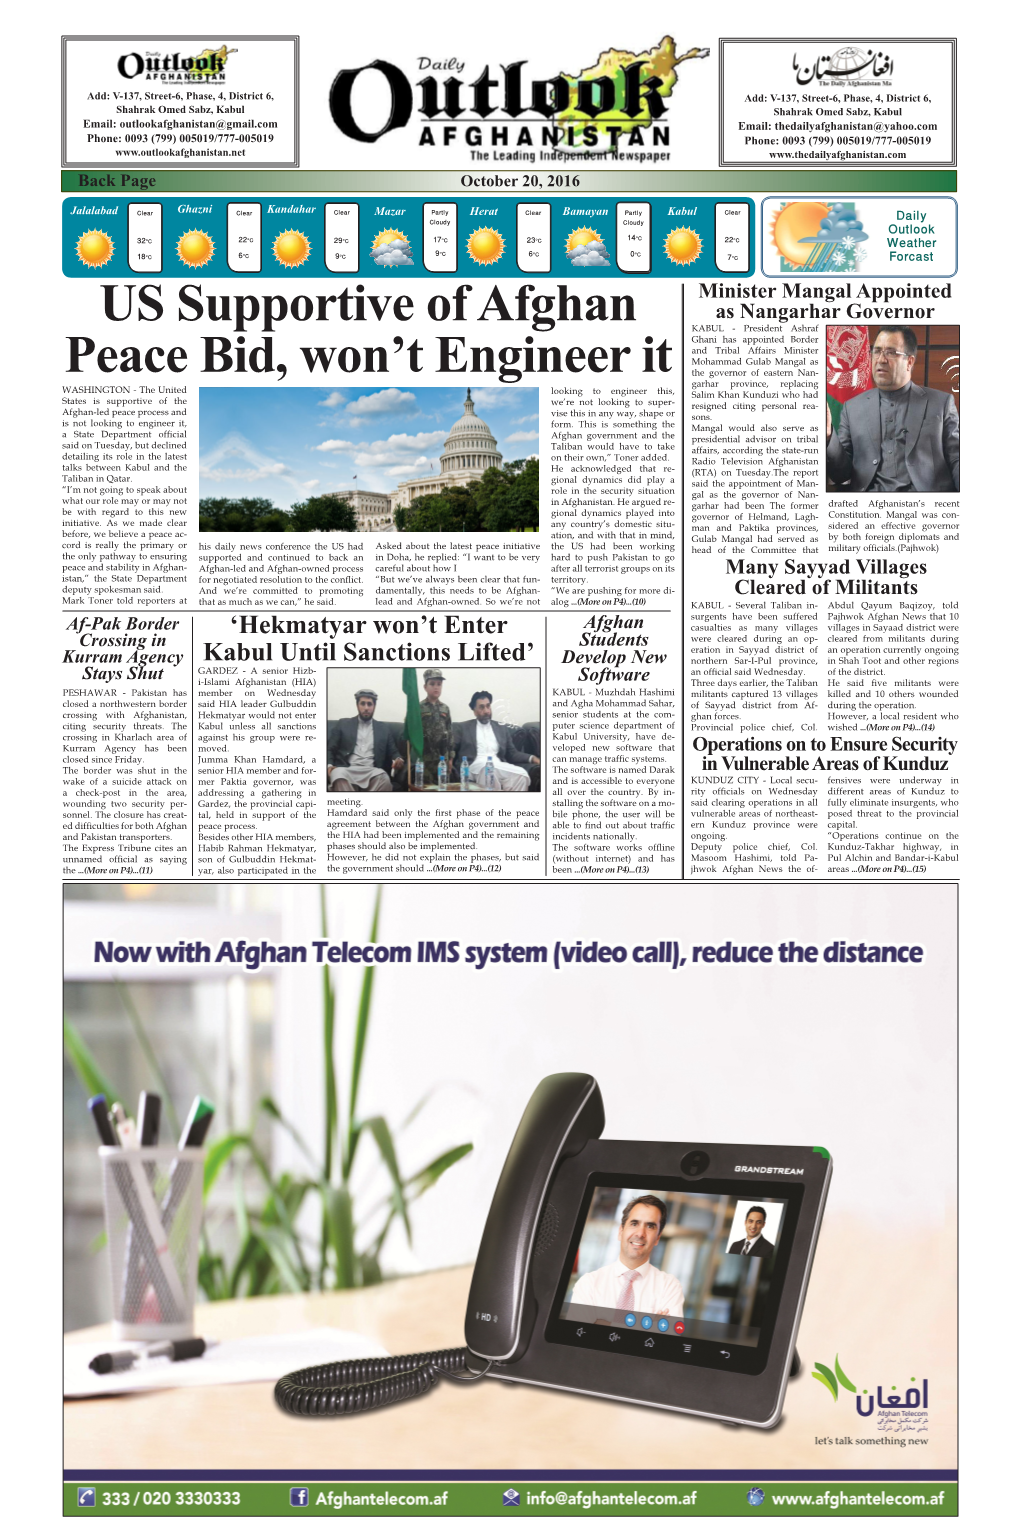 US Supportive of Afghan Peace Bid, Won't Engineer It